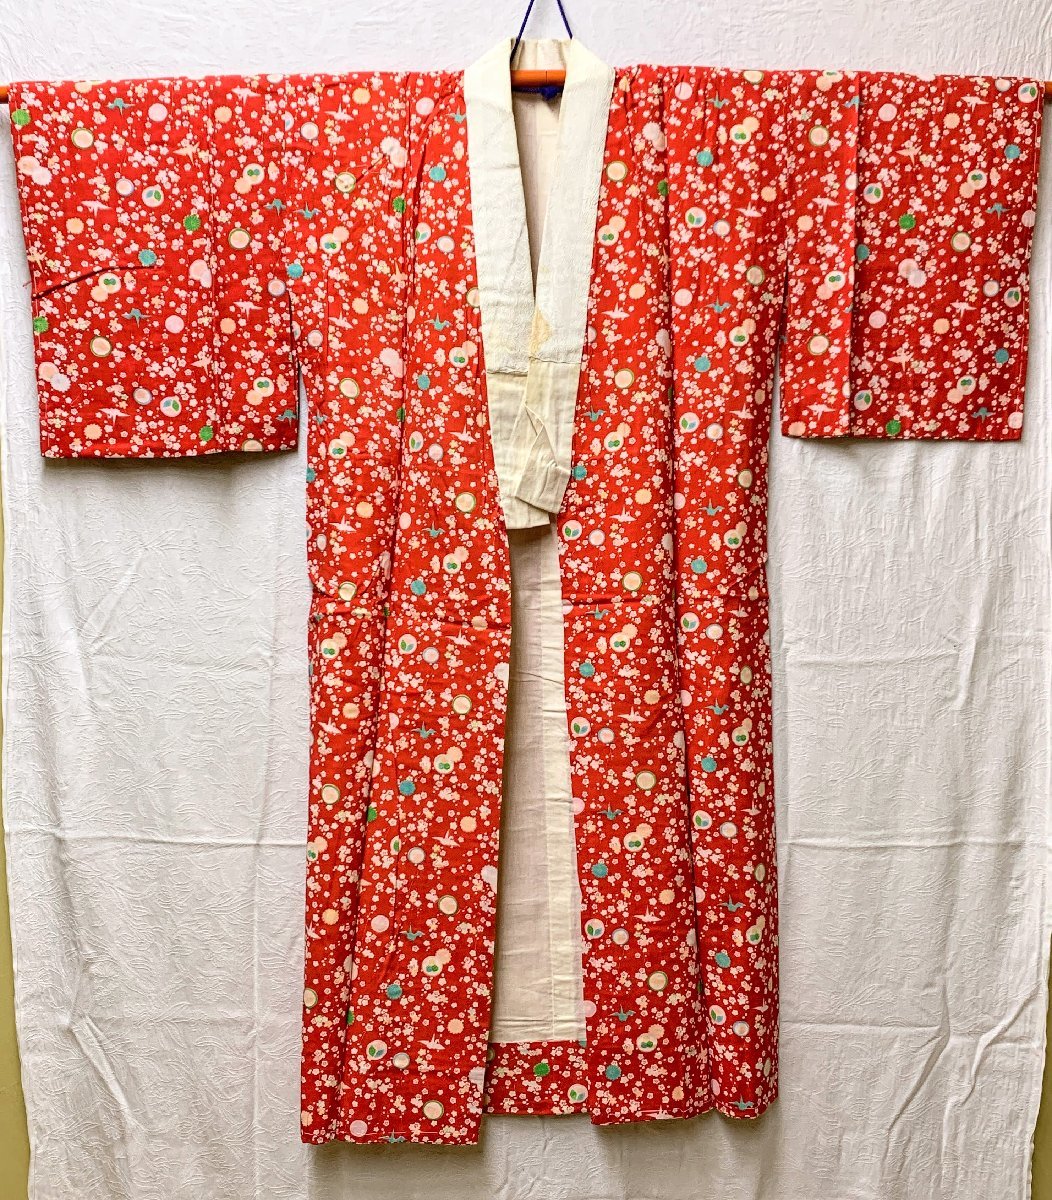 1016B/アンティーク 女性長襦袢 赤地小花小紋 レトロ お洒落 リメイク素材 古布 和装